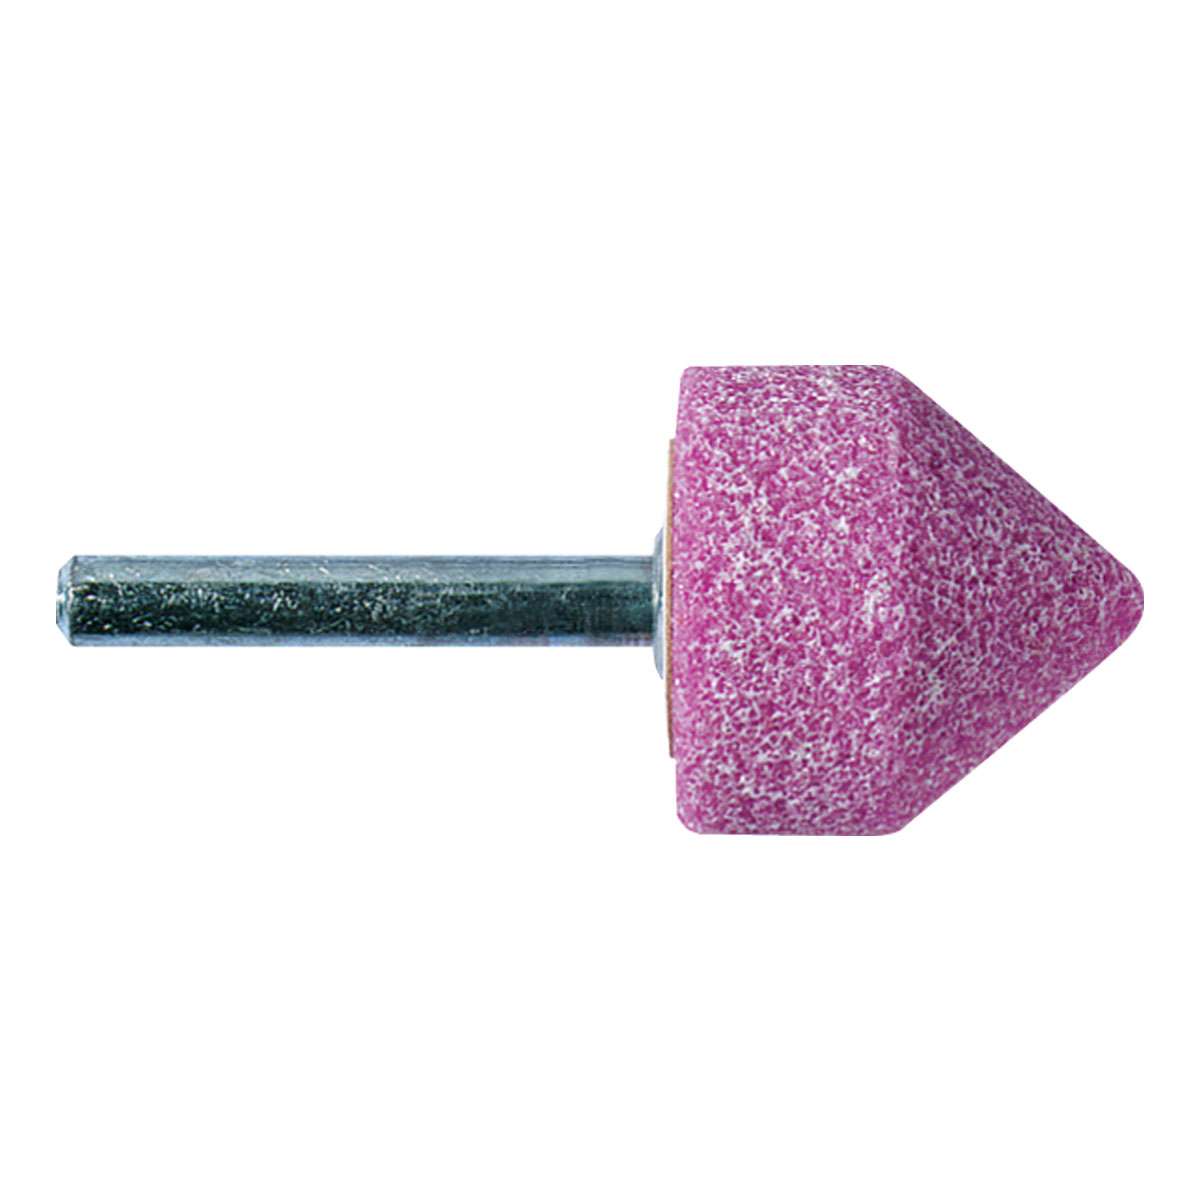 Molette a punta 90 vetrificate rosa al corindone D.8x15 gambo 3 Rosver 100 pz